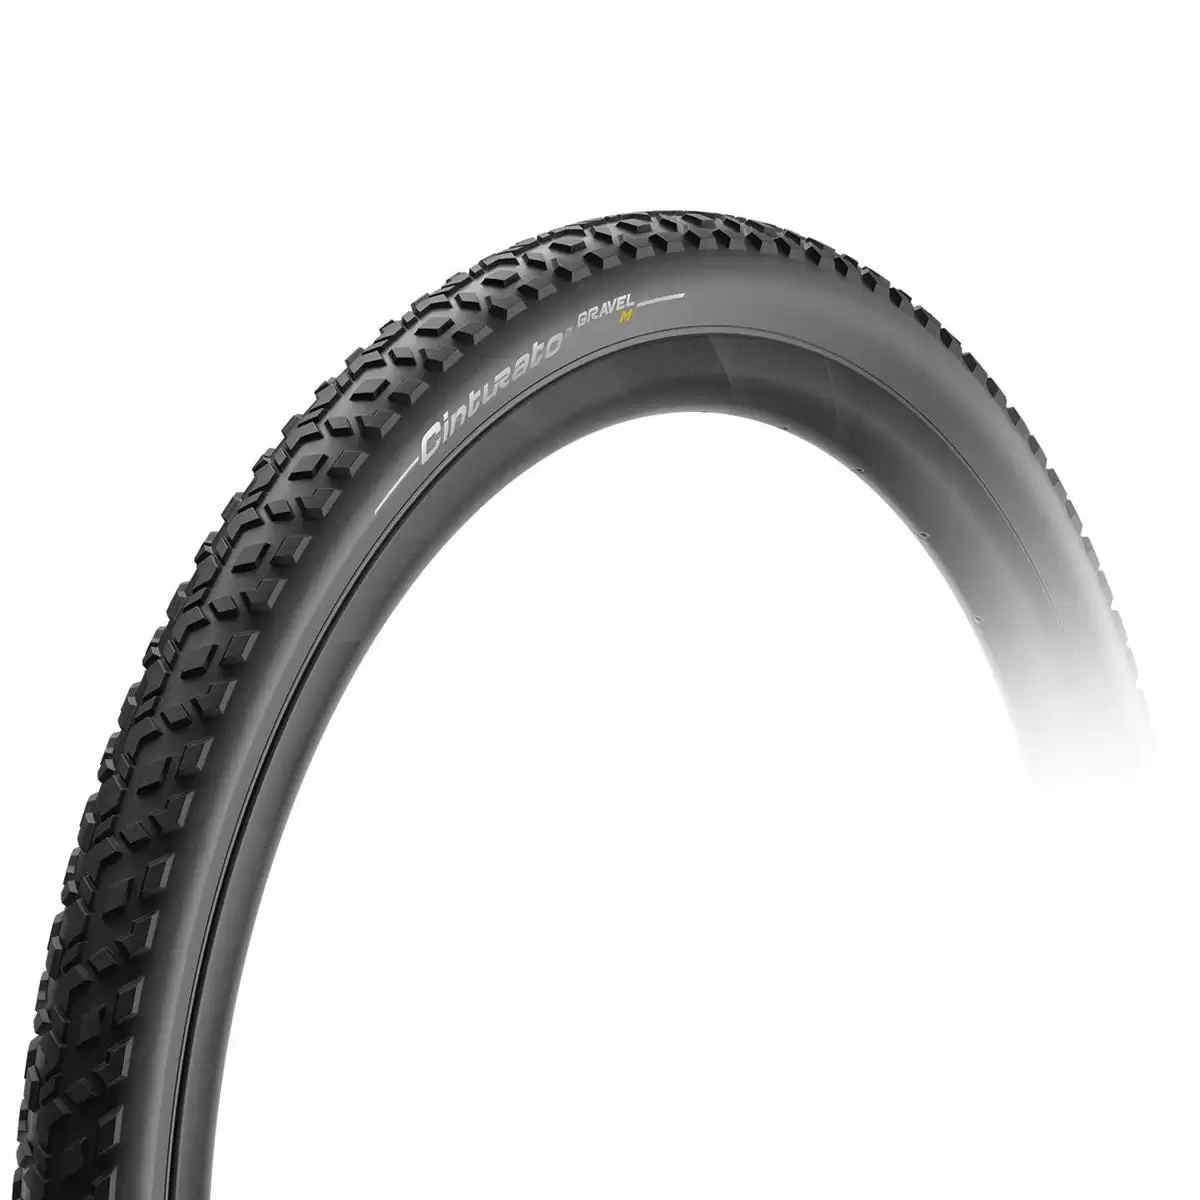 Tire Cinturato Gravel Mixed Terrain 700x40c Tubeless Ready Black - image